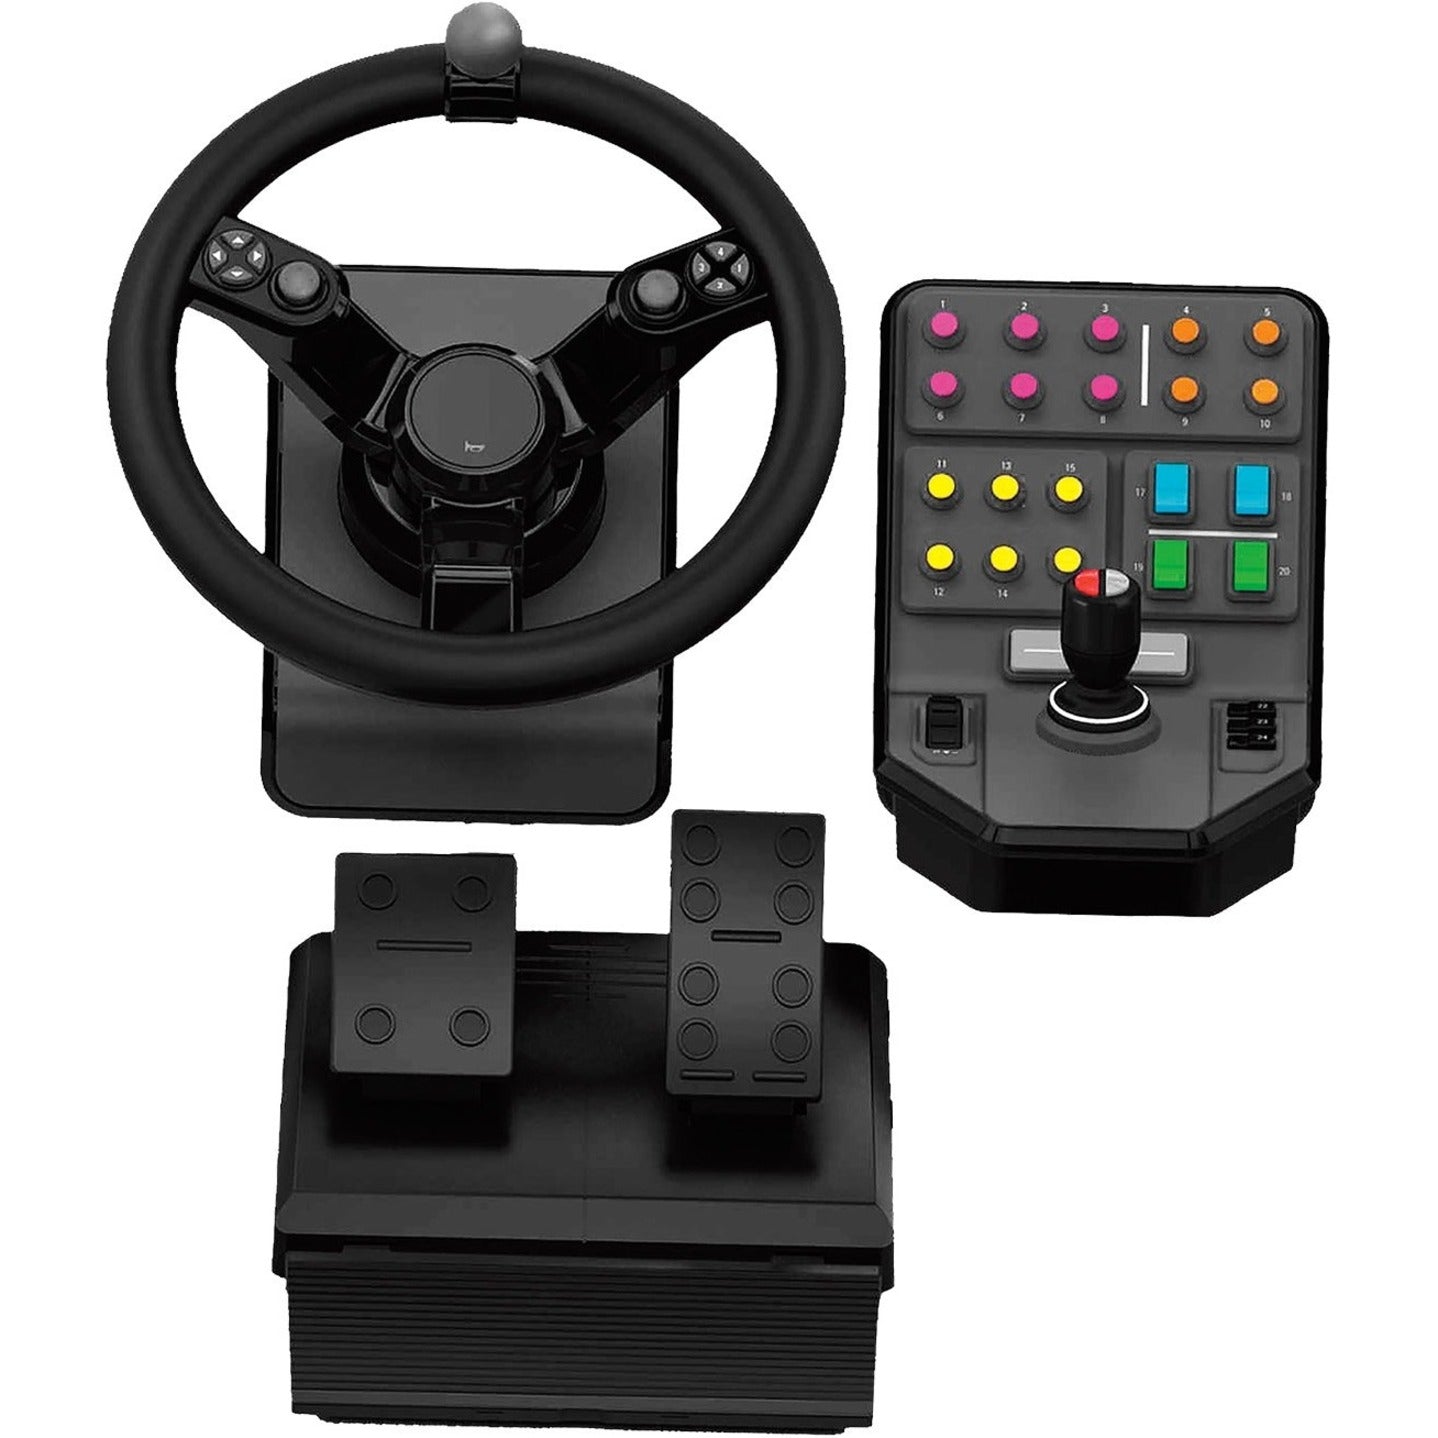 Logitech G 945-000063 Heavy Equipment Bundle Simulation Wheel, Pedals and Side Panel Control Deck, USB 2.0-compliant